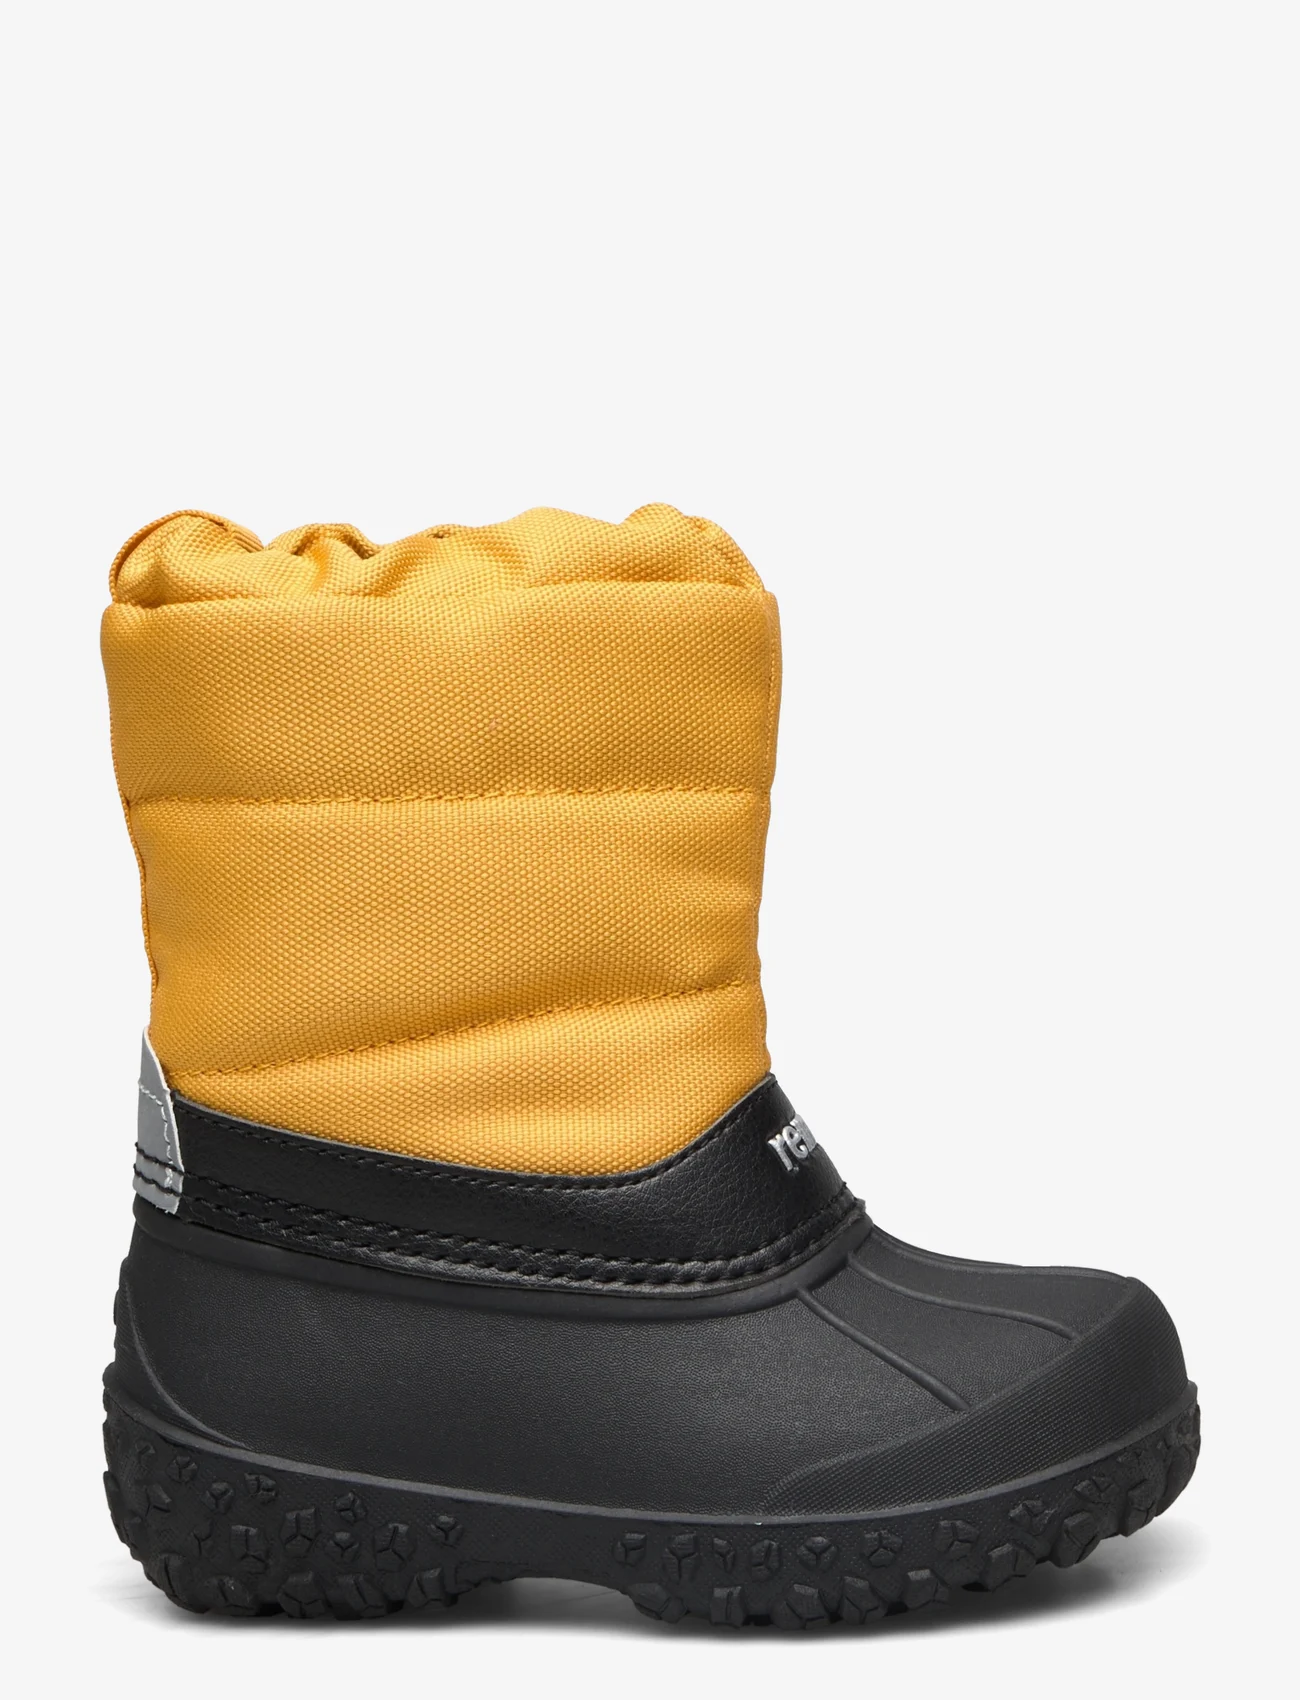 Reima - Winter boots, Loskari - børn - ochre yellow - 1